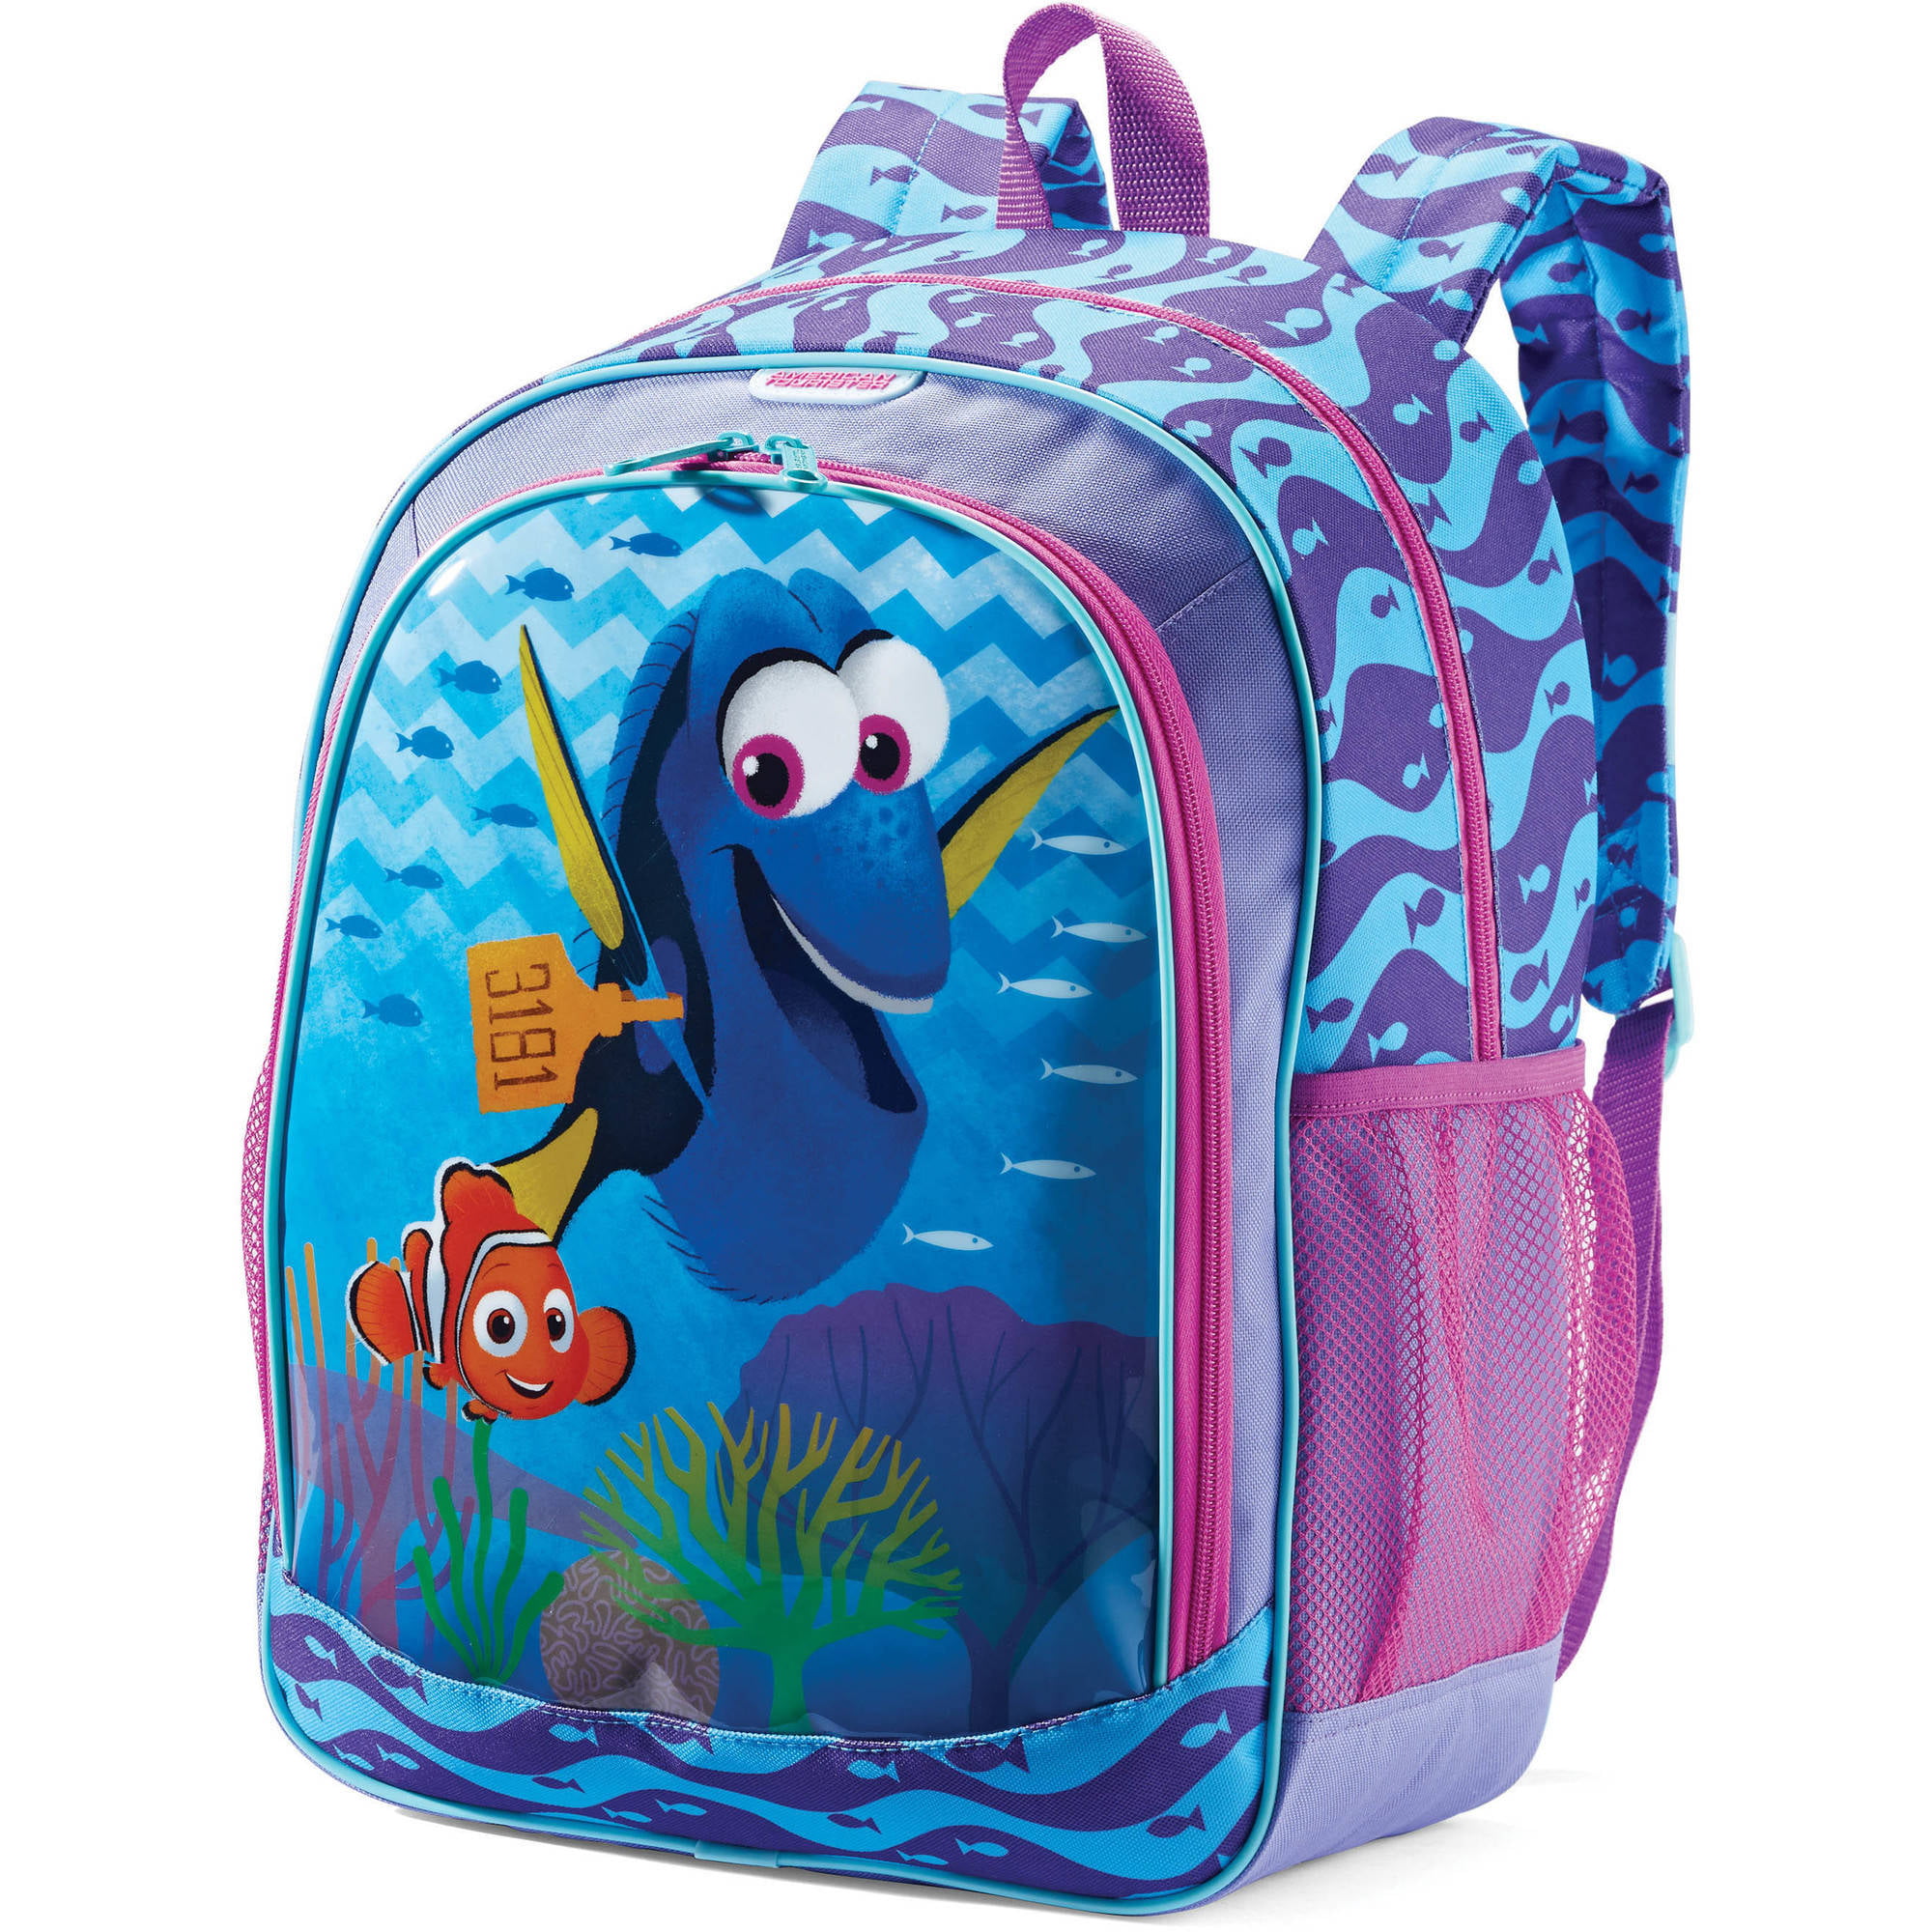 DISNEY Dory & Nemo 16" Backpack Kids Girls School Book Bag Pink NEW 